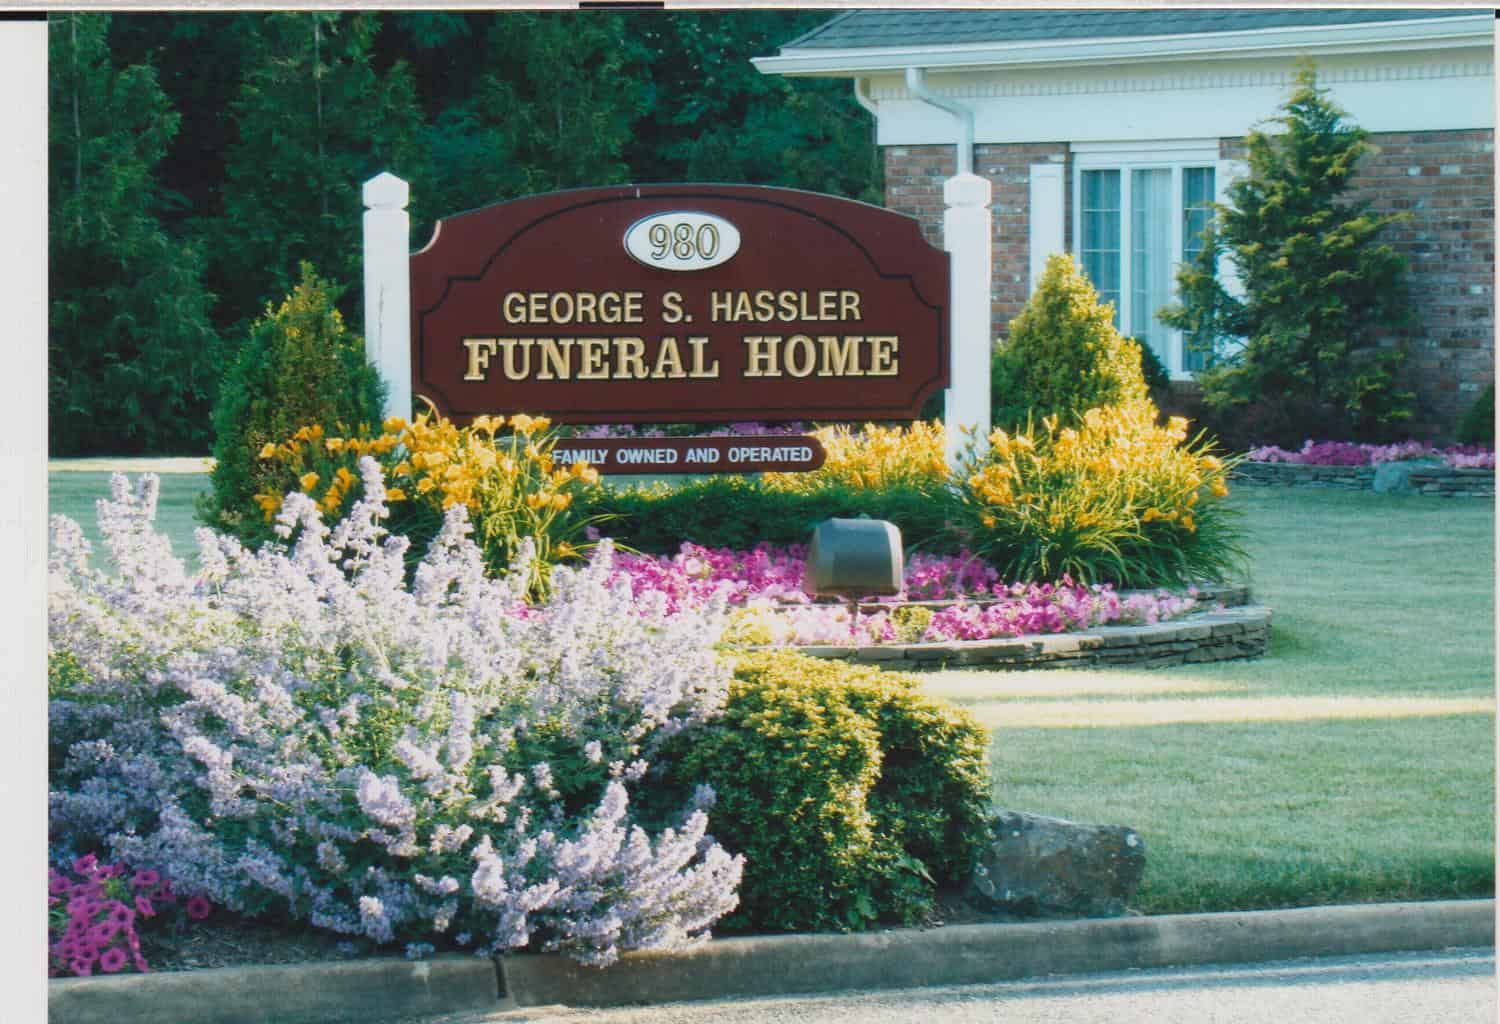 George S. Hassler Funeral Home | Jersey Shore Online